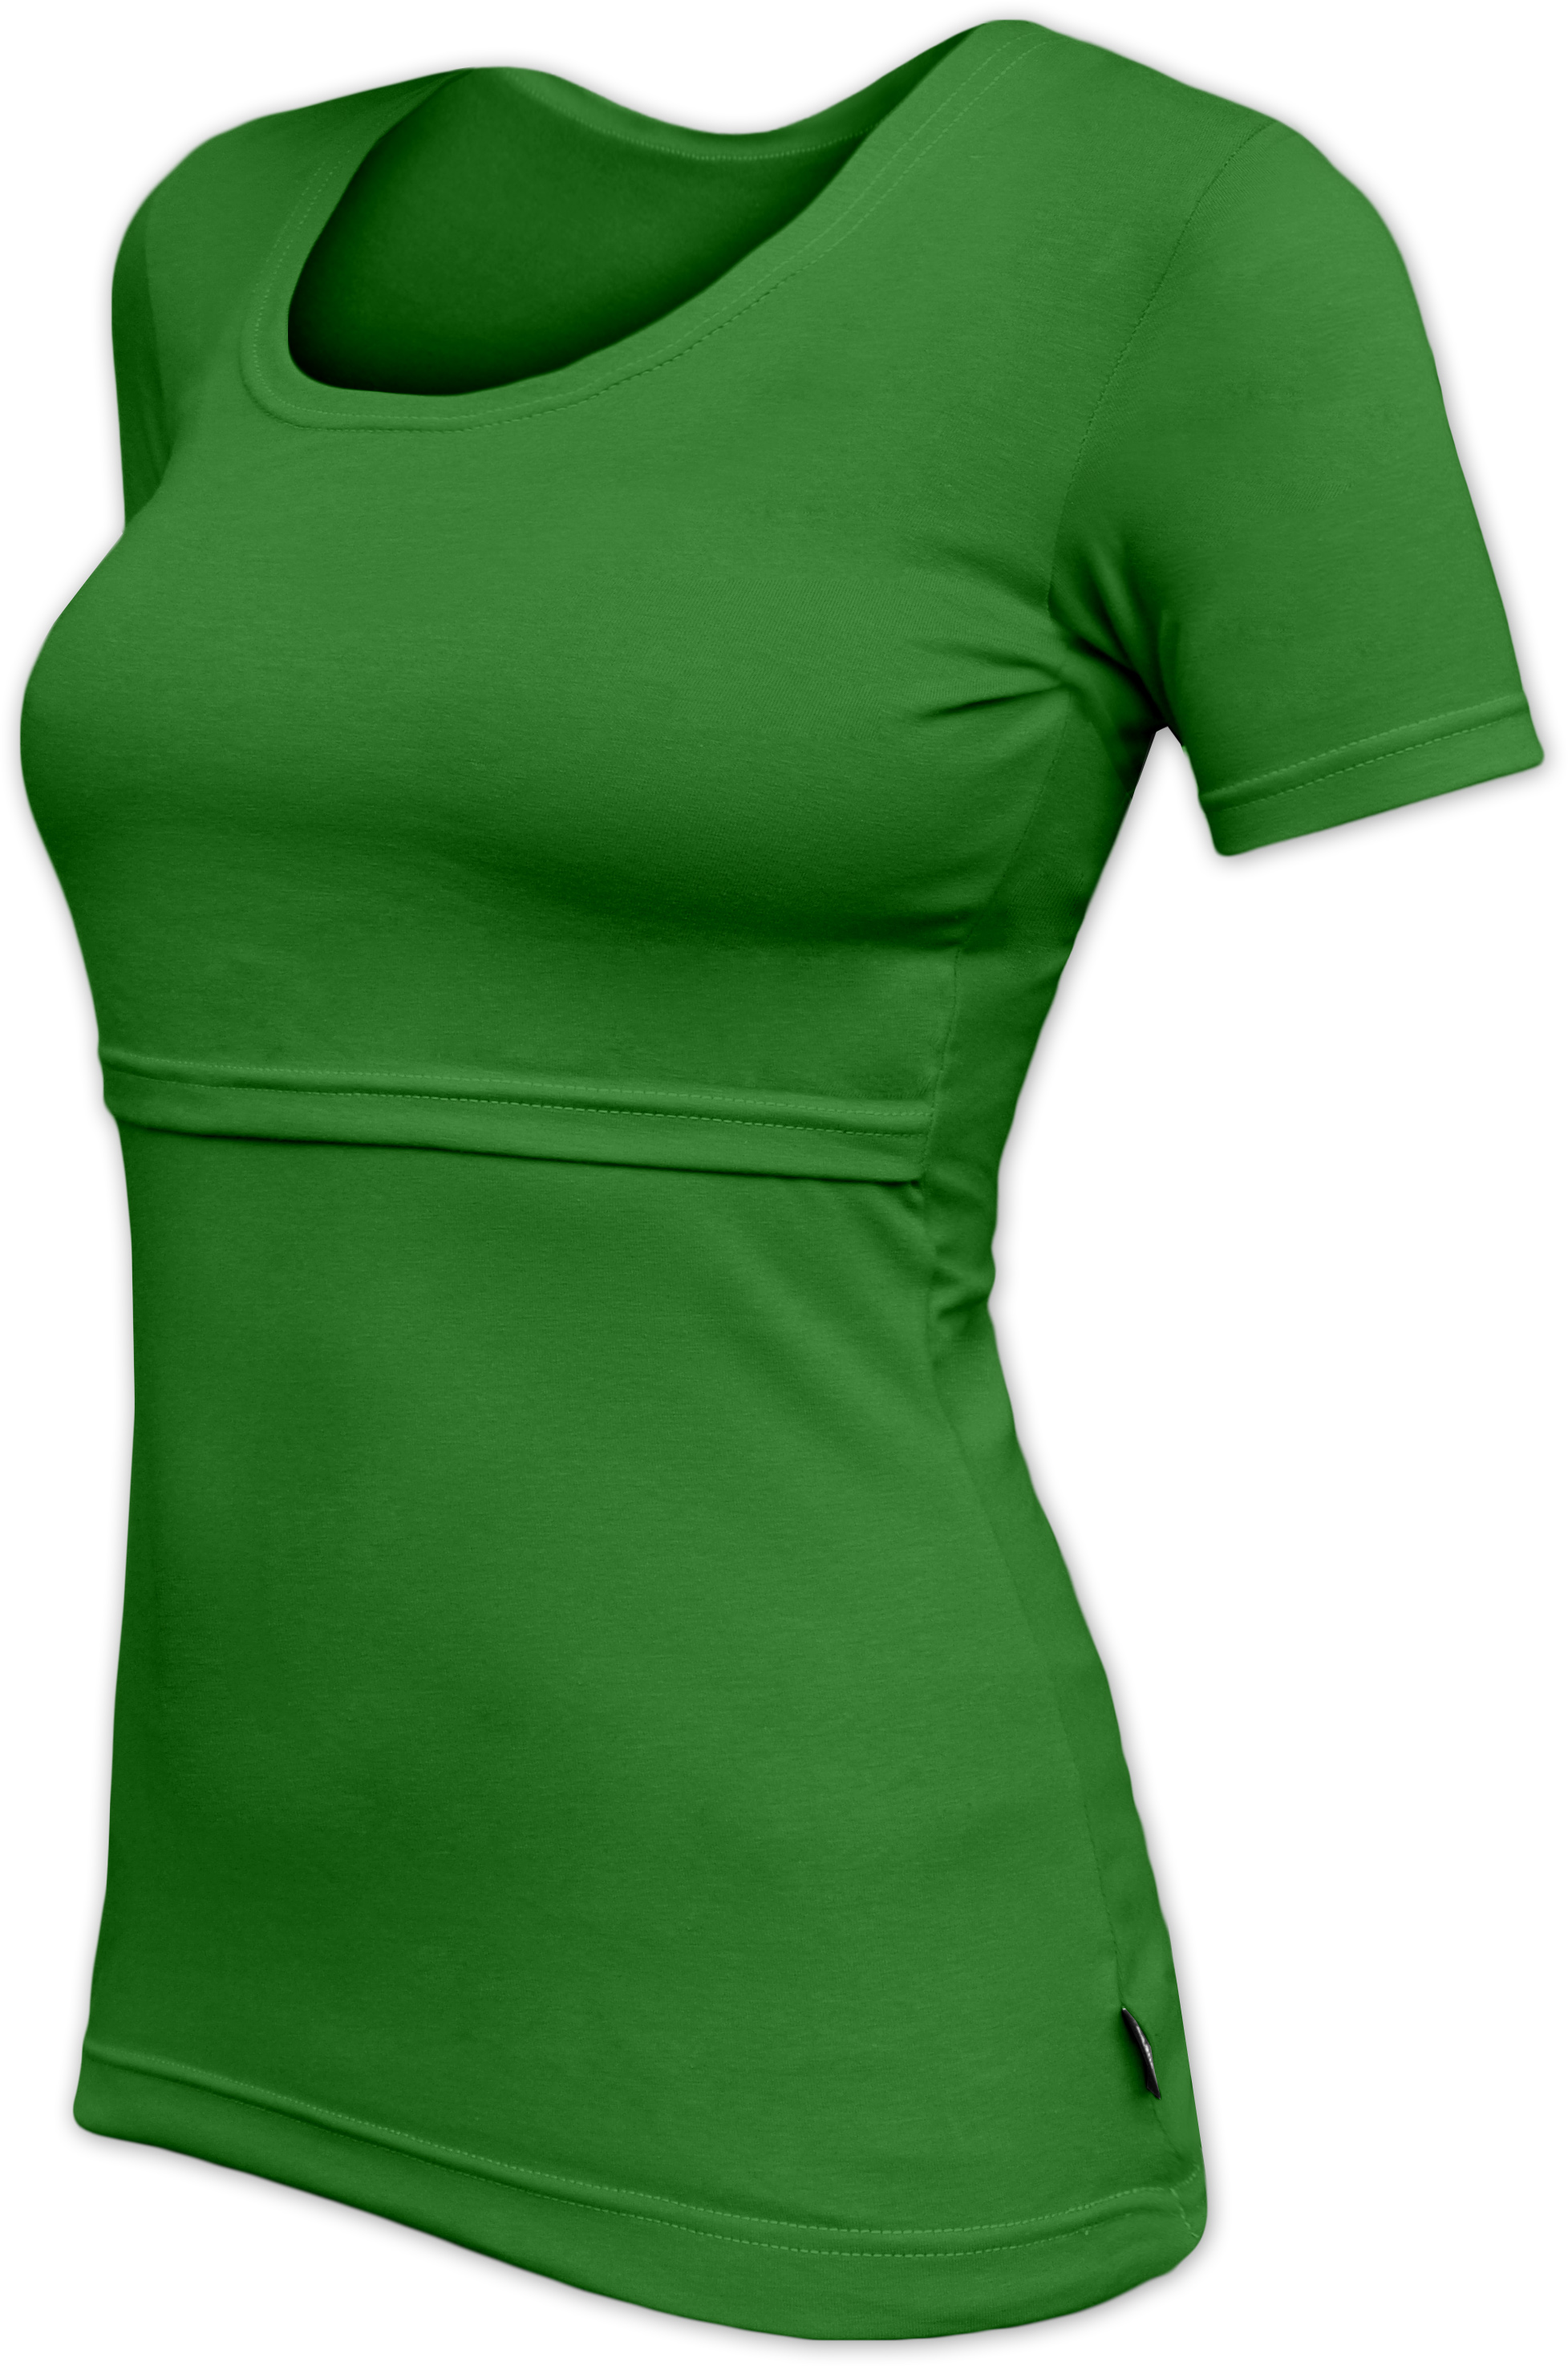 KATERINA- Stillshirt, kurze Ärmel, dunkelgrün, S/M